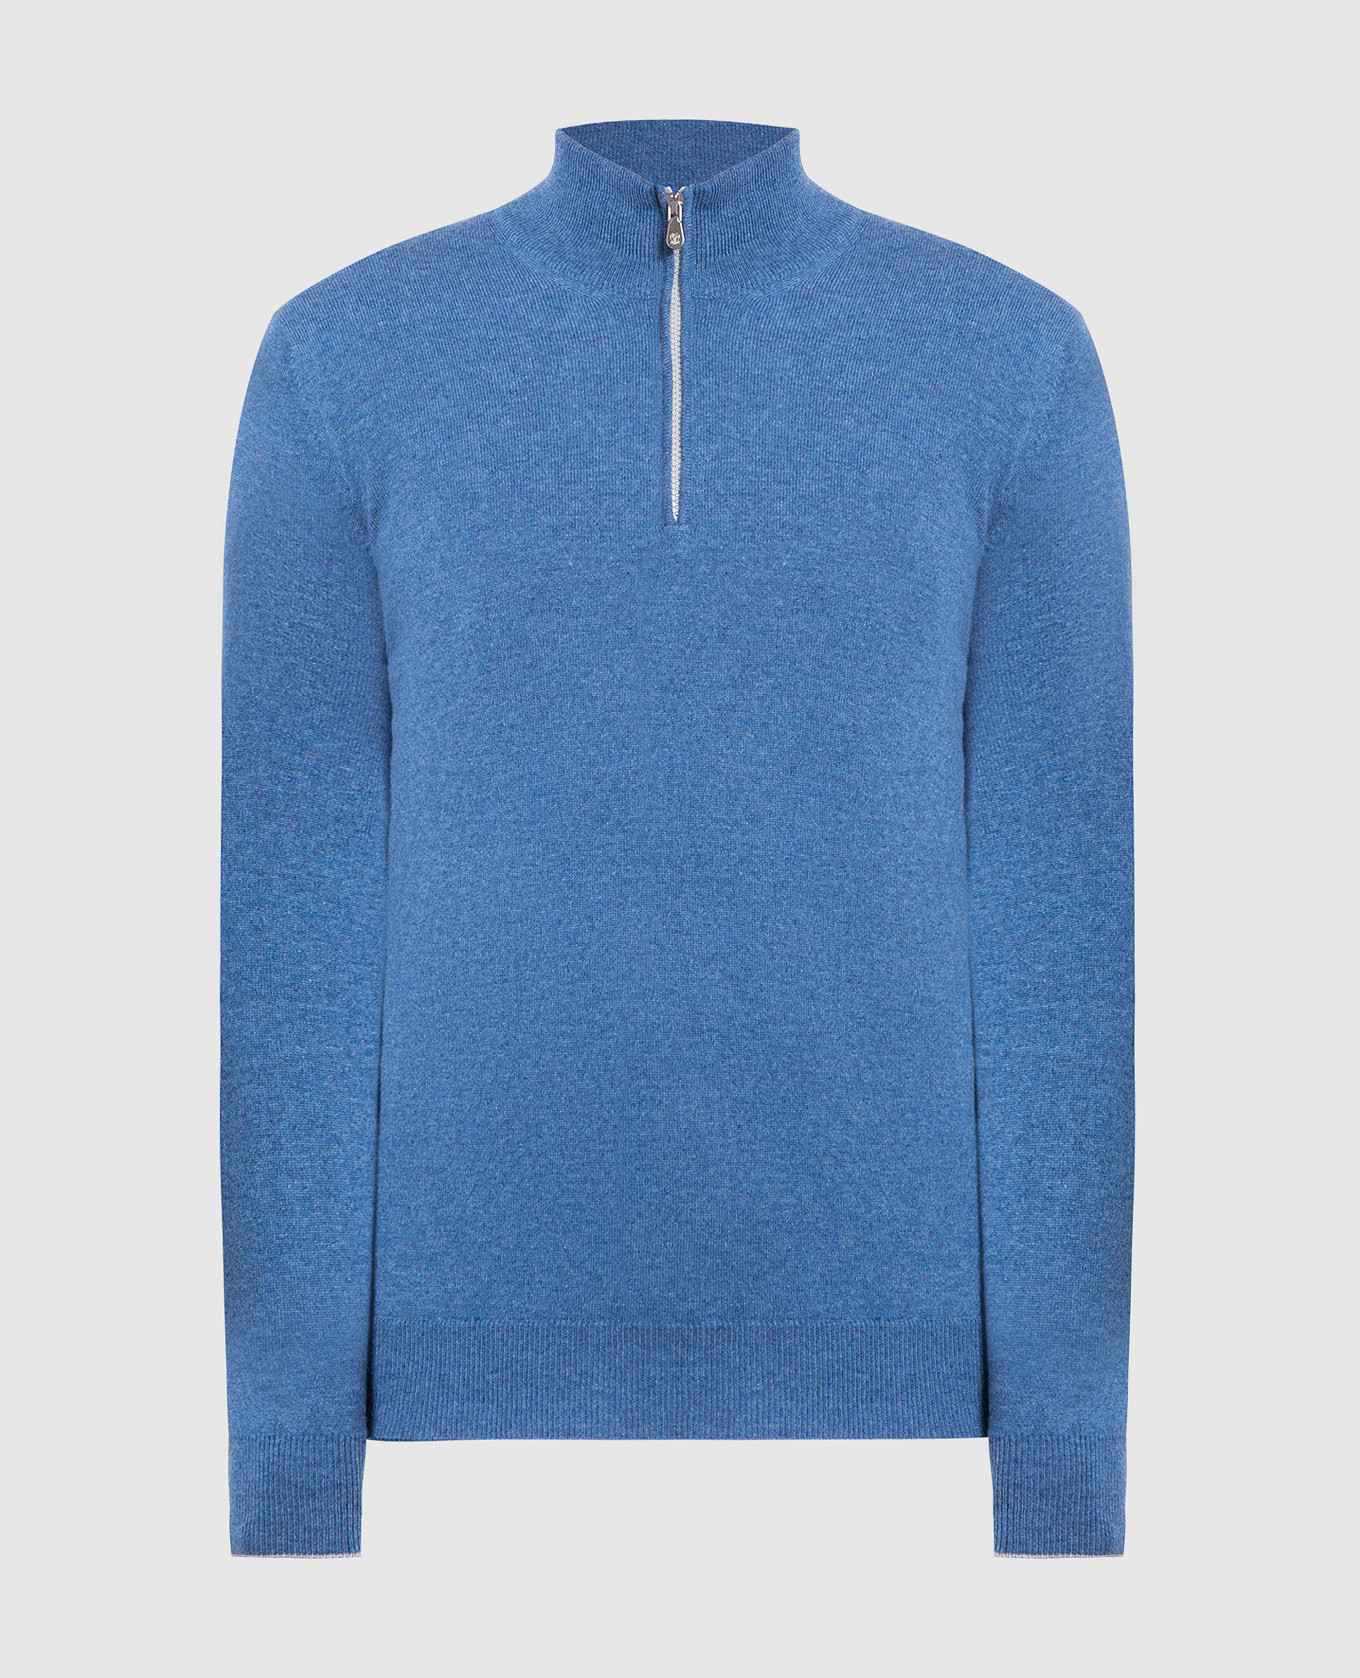 Blue cashmere sweater